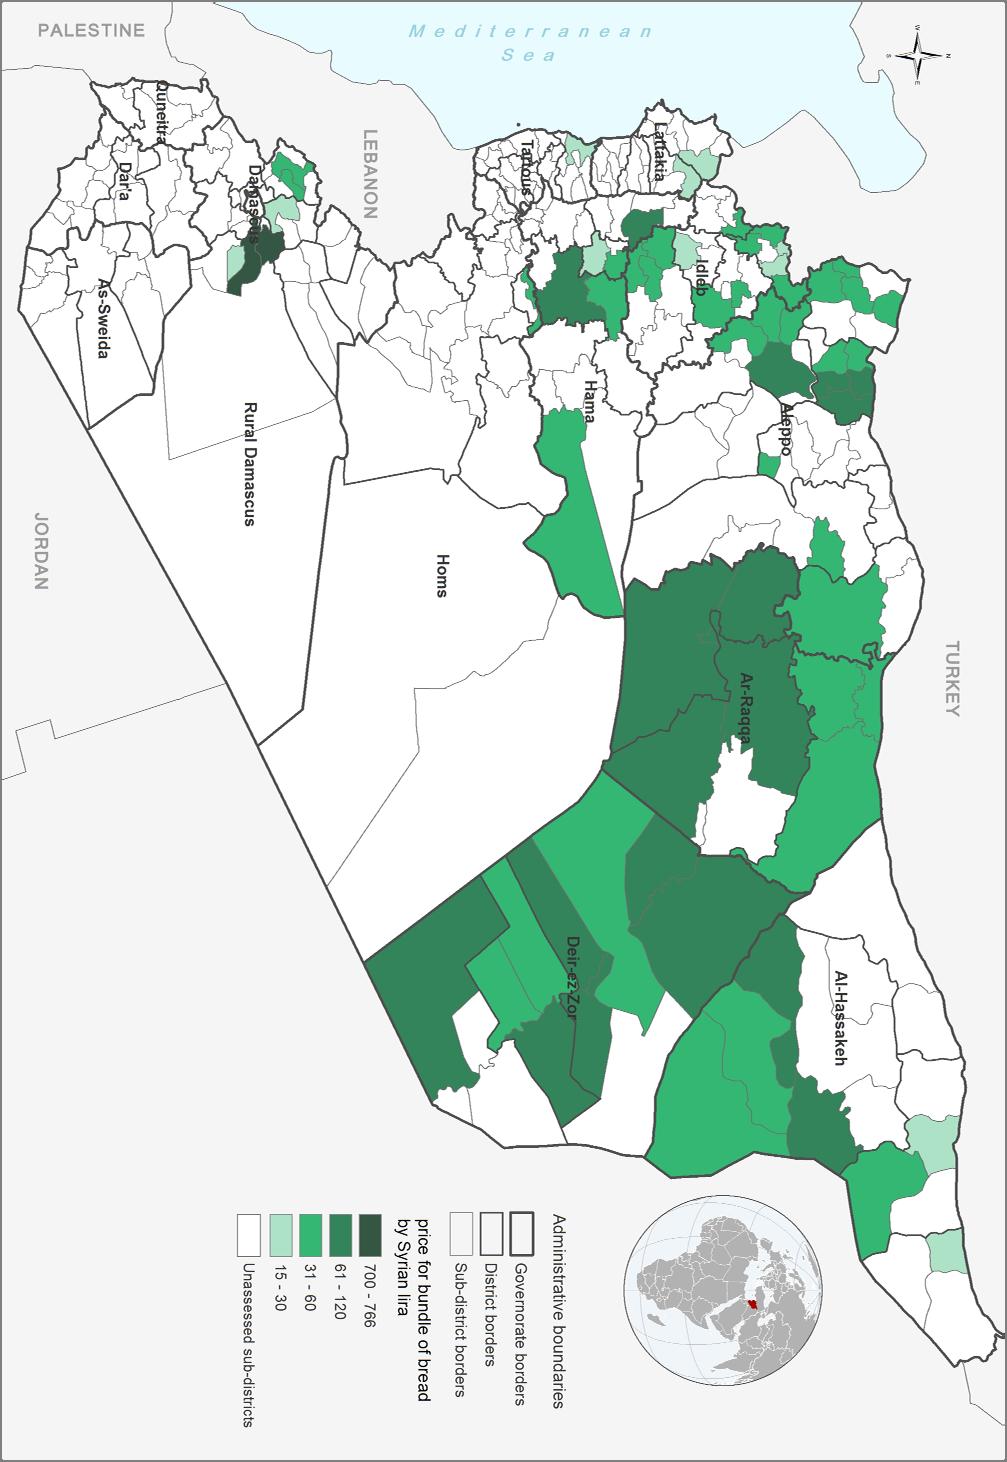 BAKERIES IN SYRIA ASSESSMENT REPORT December 2014